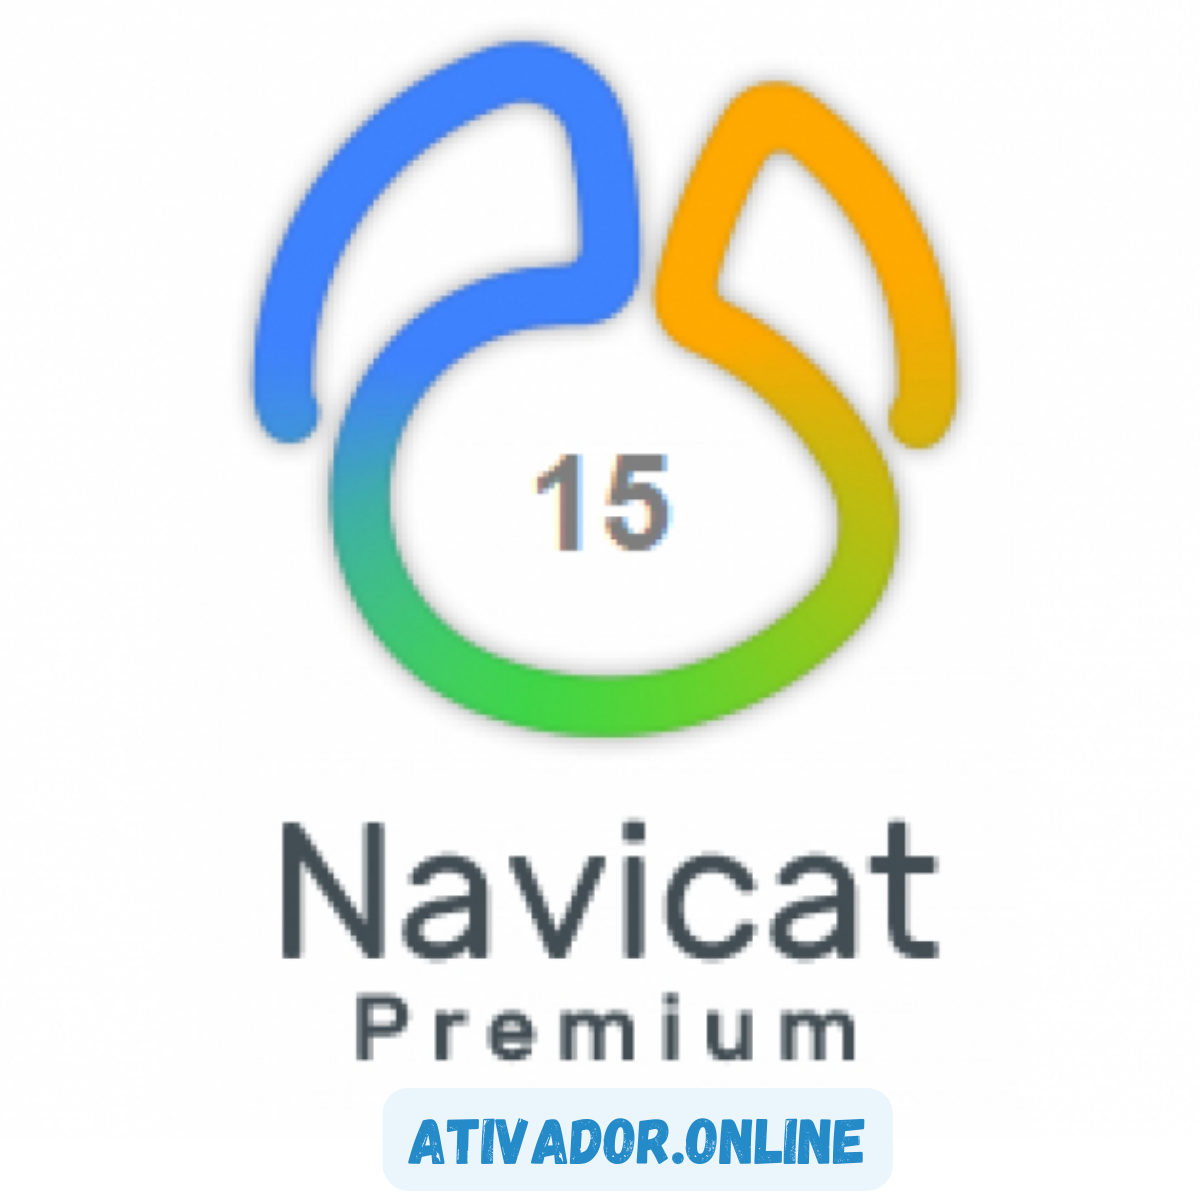 Baixar Navicat Premium 15 Rachadura Completa